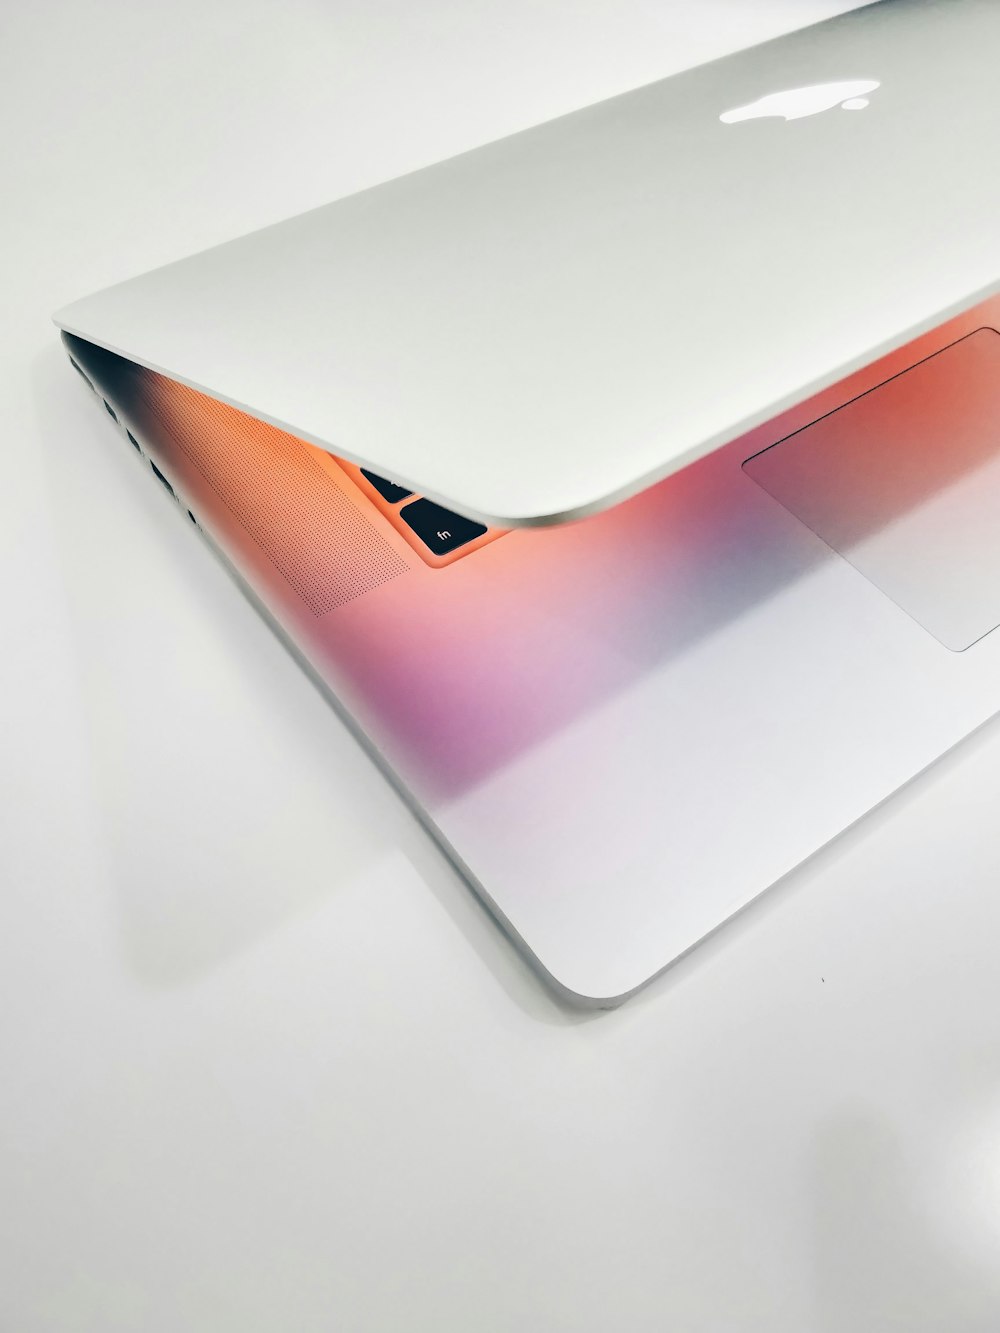 Apple MacBook air su superficie in legno